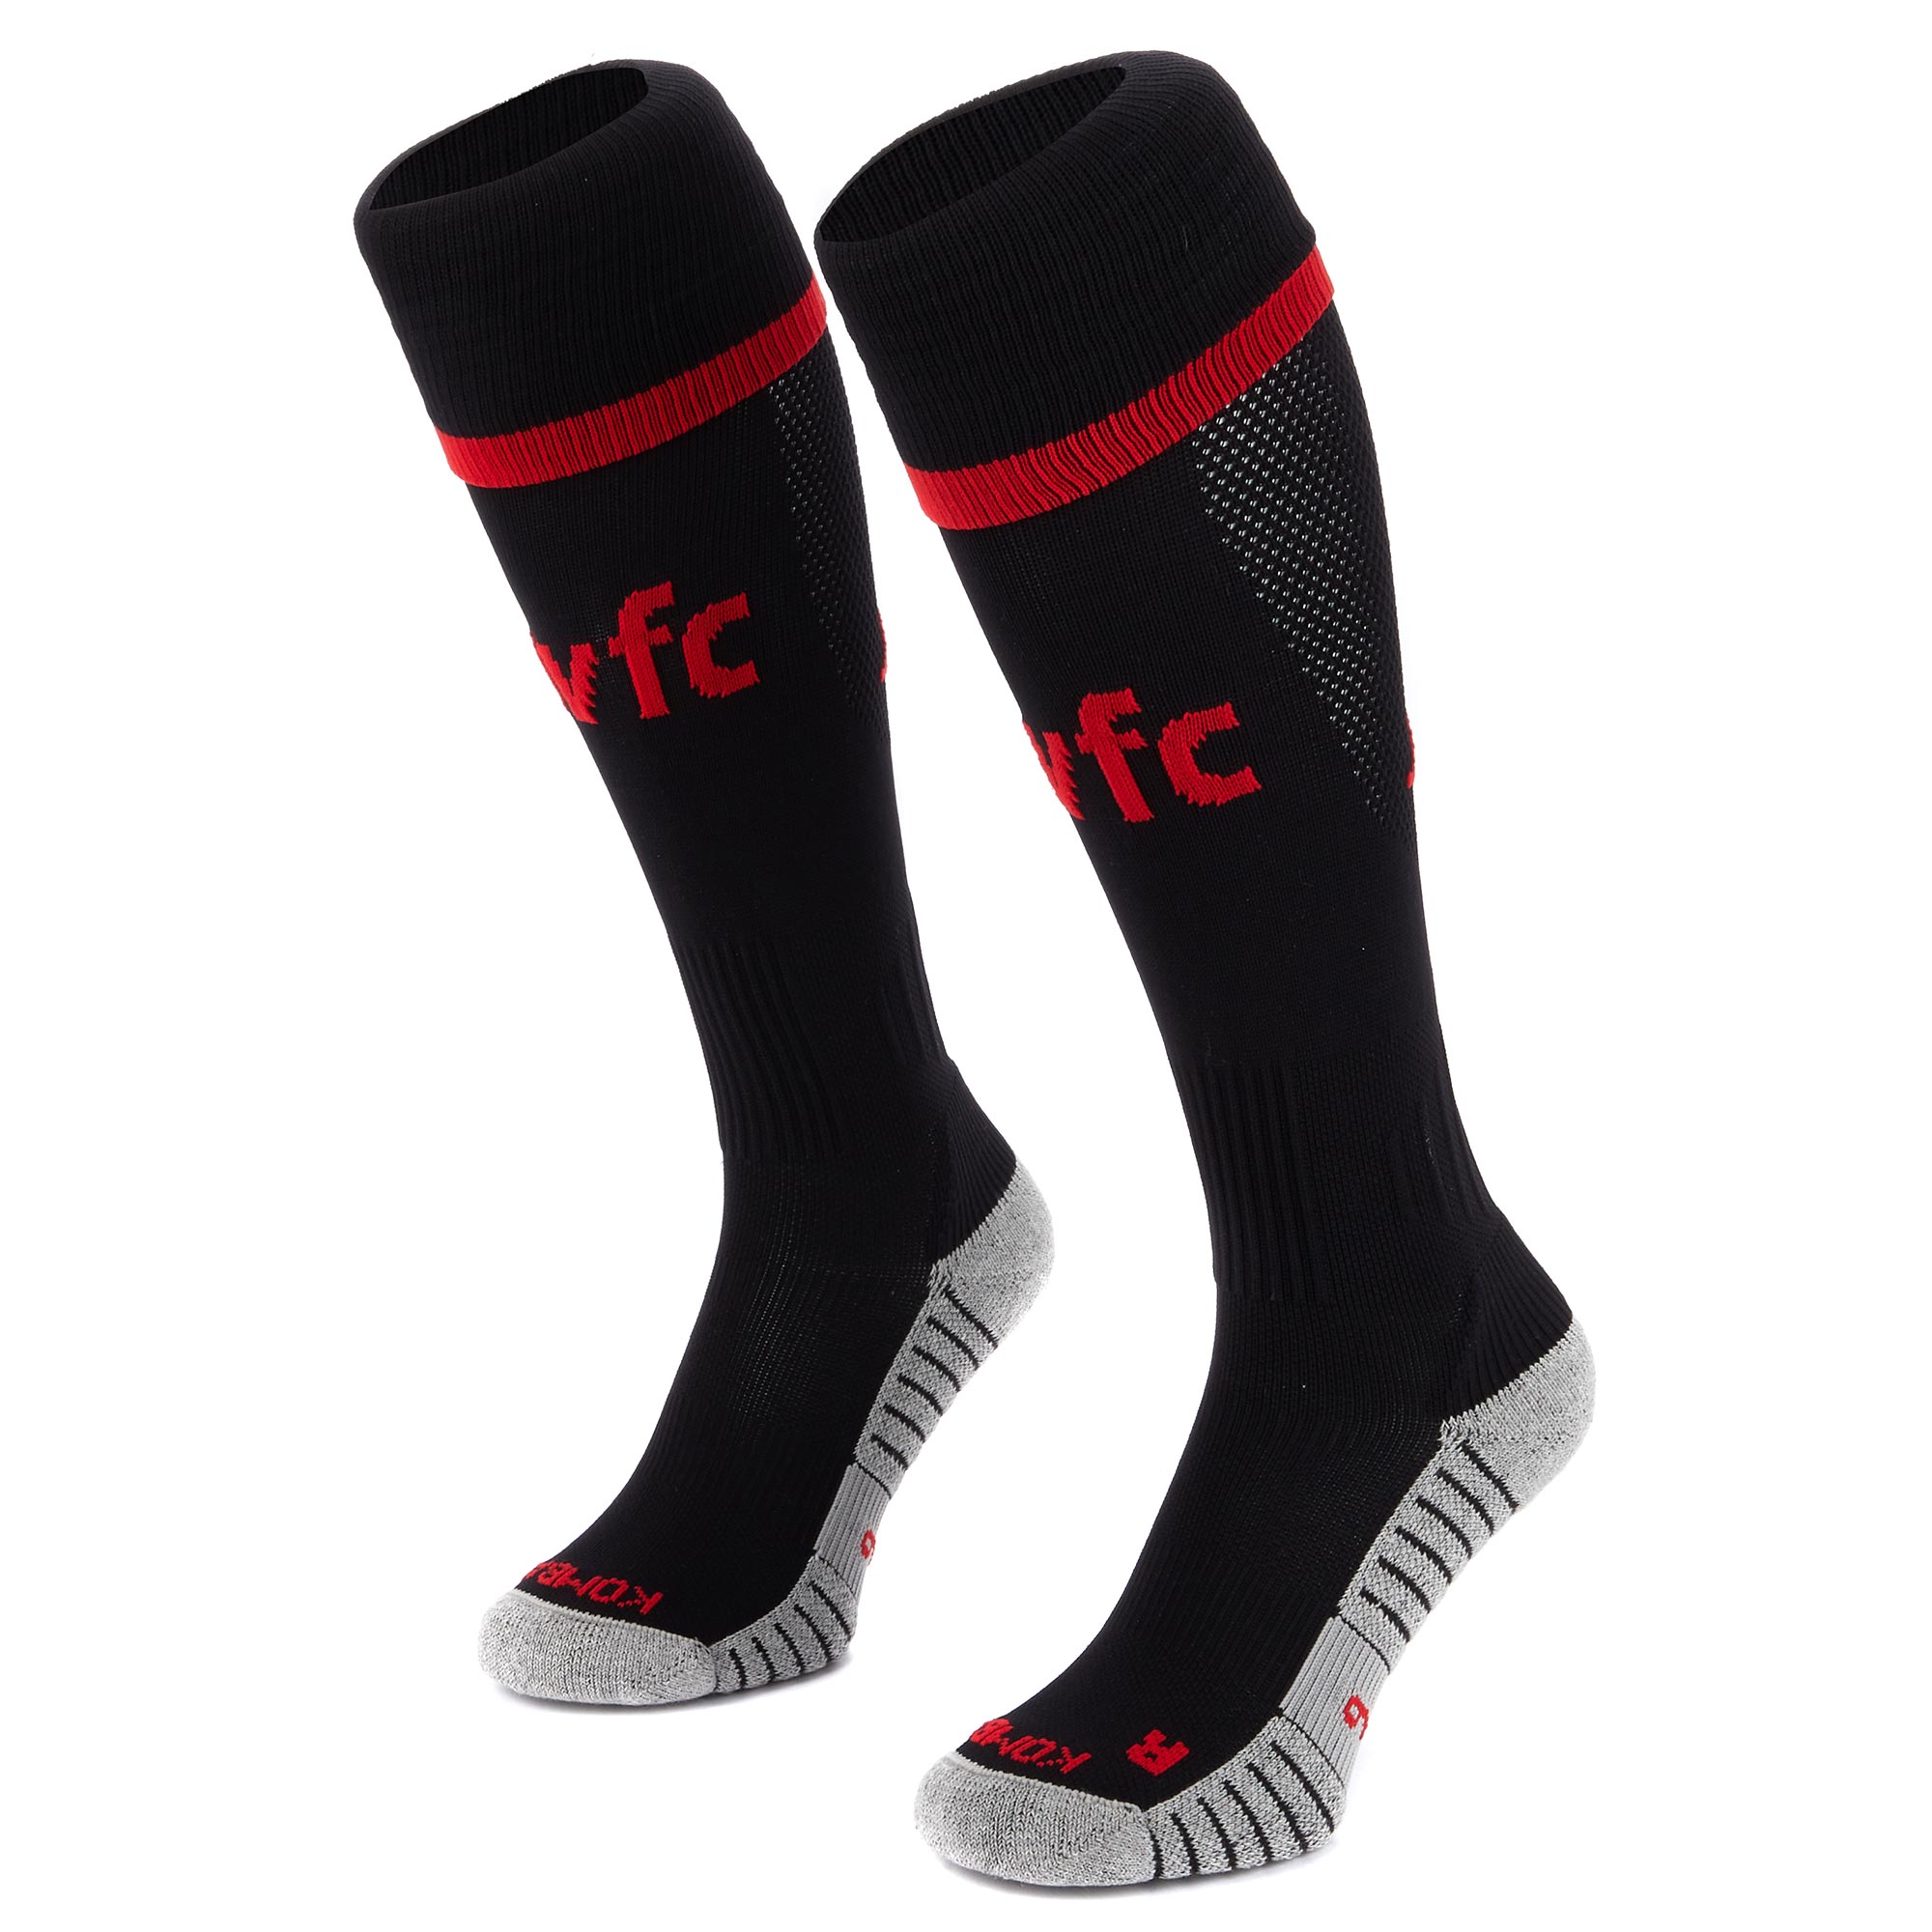 Kappa Aston Villa Football Socks Navy Size 12.5k-2 New Kid's Kappa 3rd Socks 